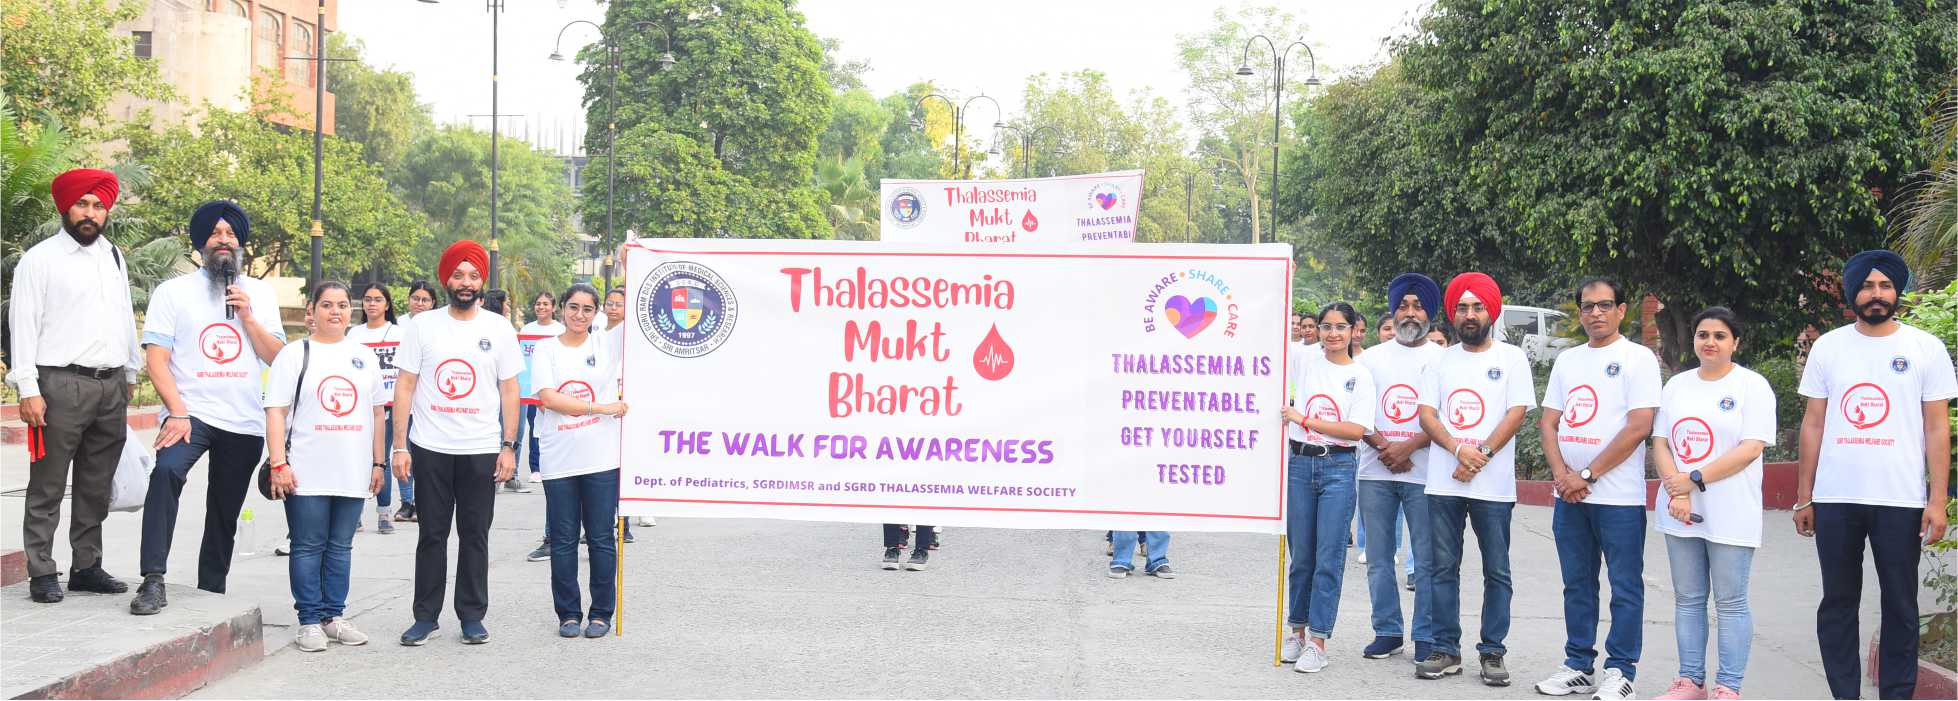 galimgs/Thalassemia Mukt Bharat Program Started/P - 4.jpg